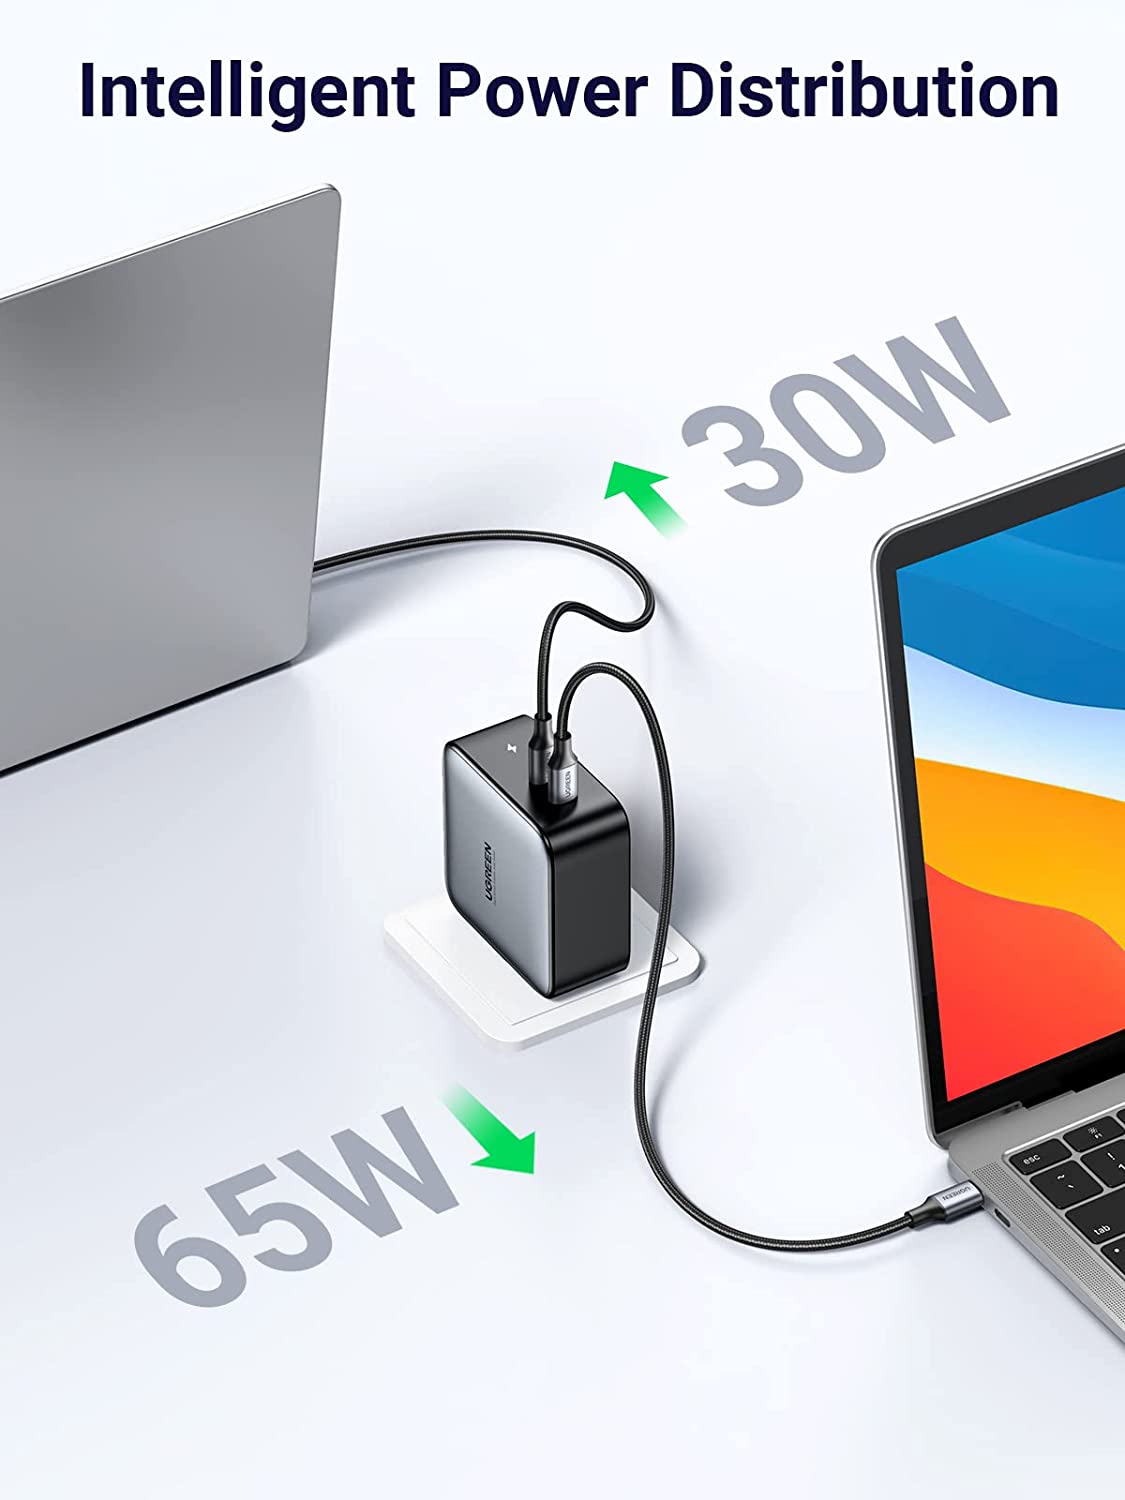 UGREEN 100W USB C Charger, Nexode 4-Port GaN Foldable